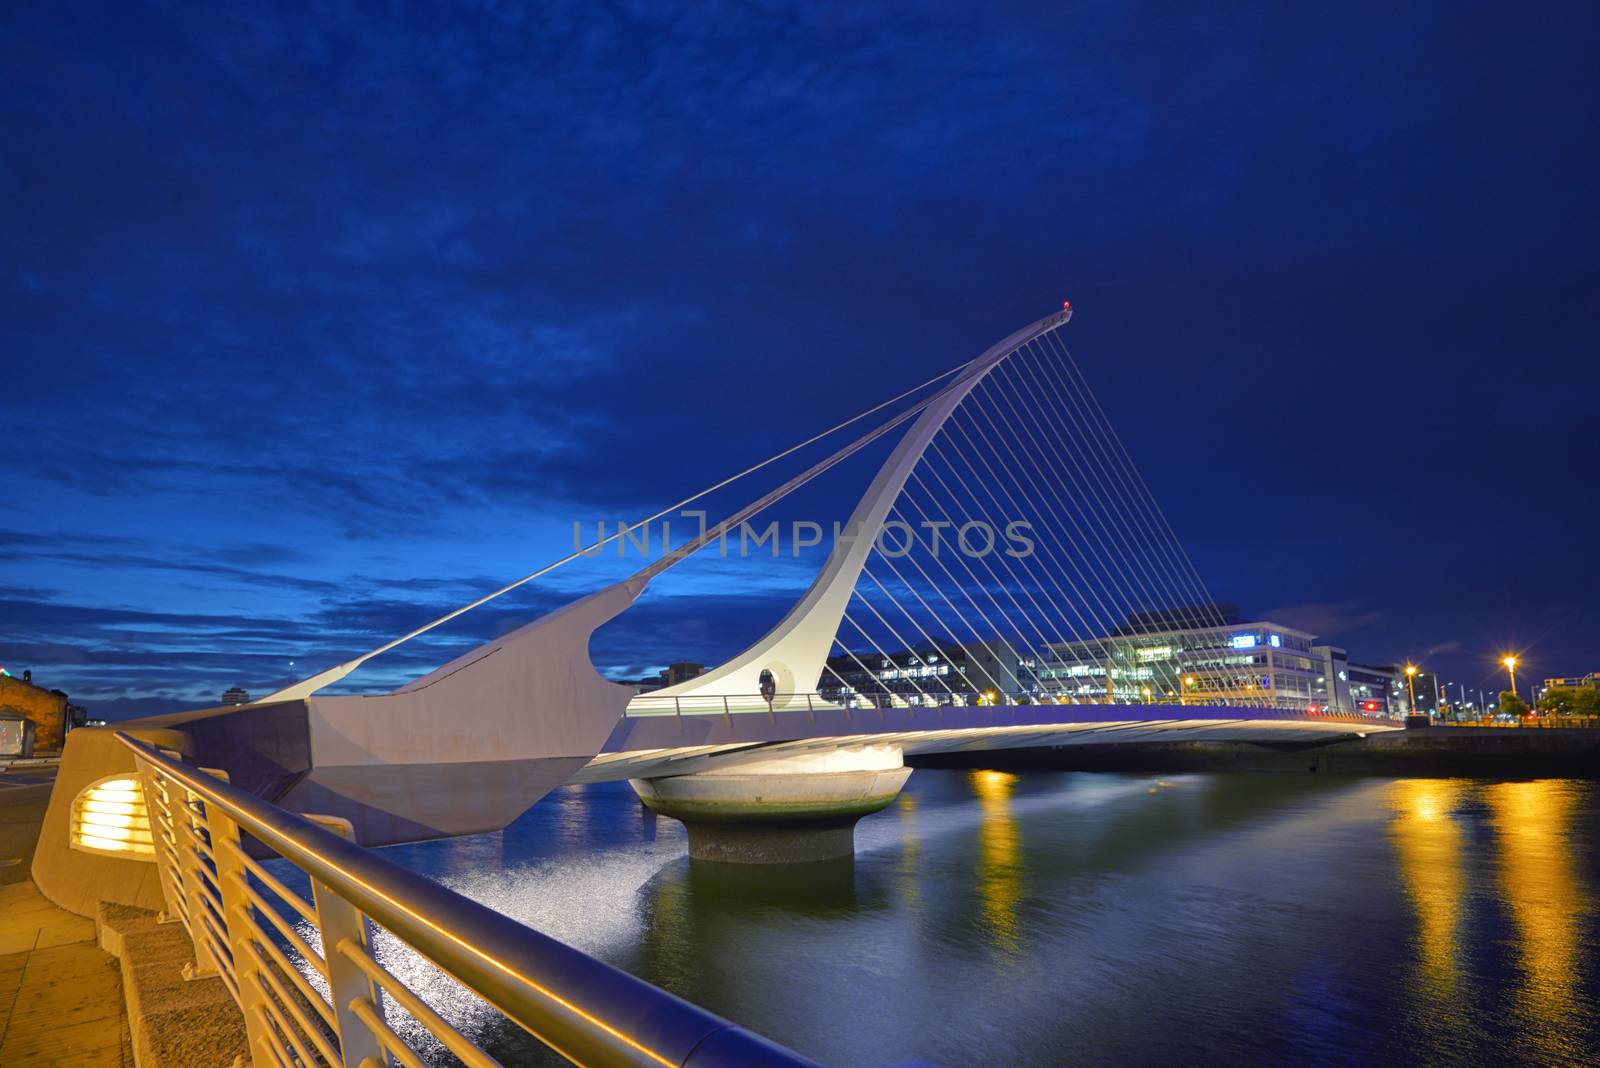 The Samuel Beckett Bridge in night time